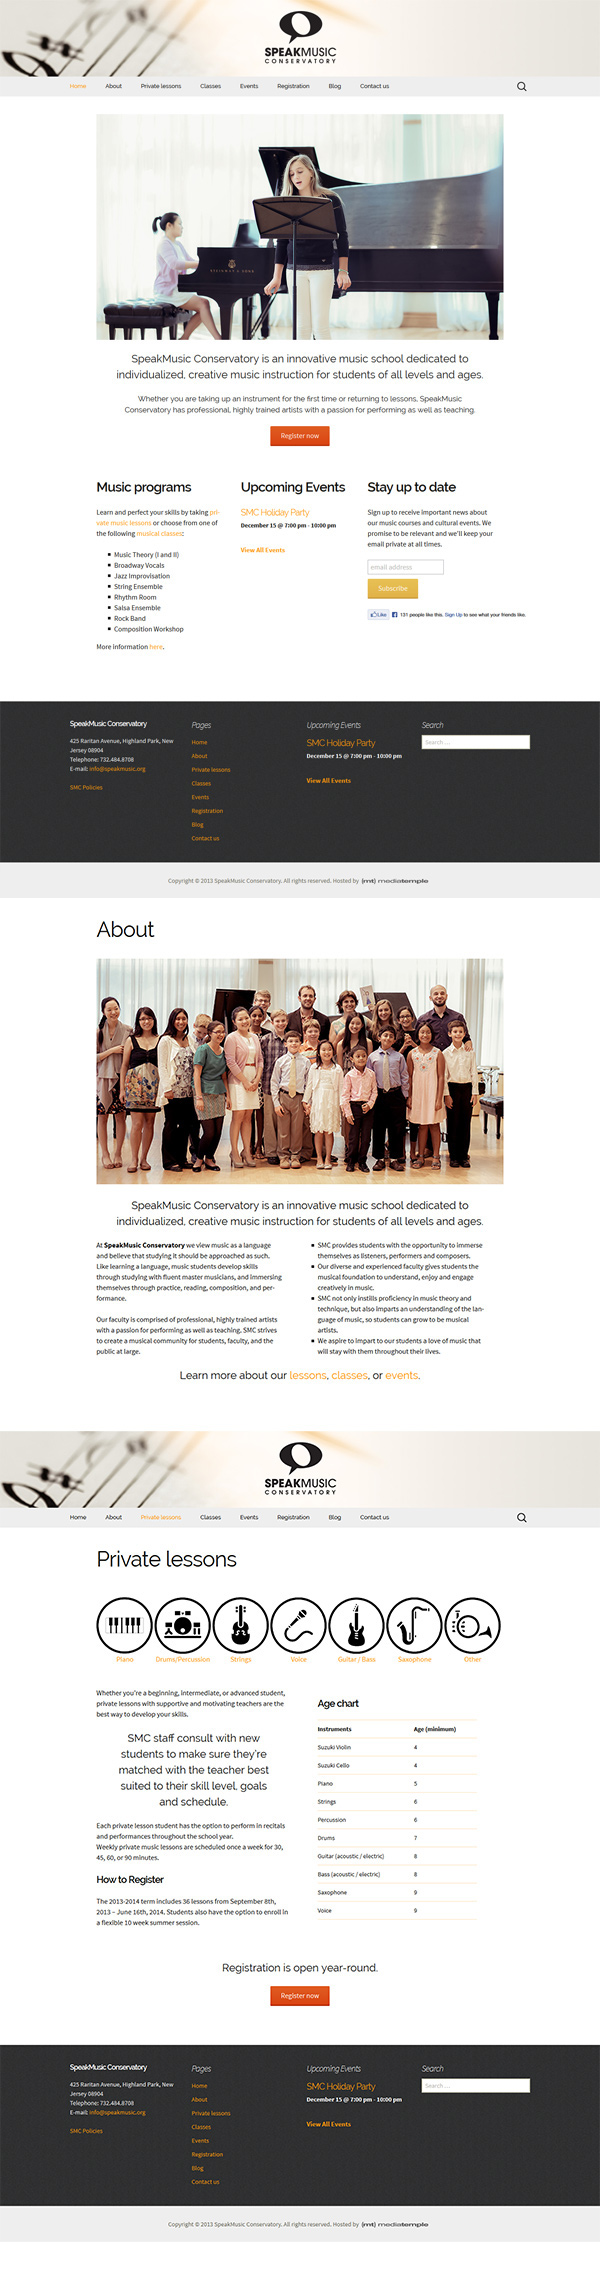 Webdesign Web Layout portal presentation corporate